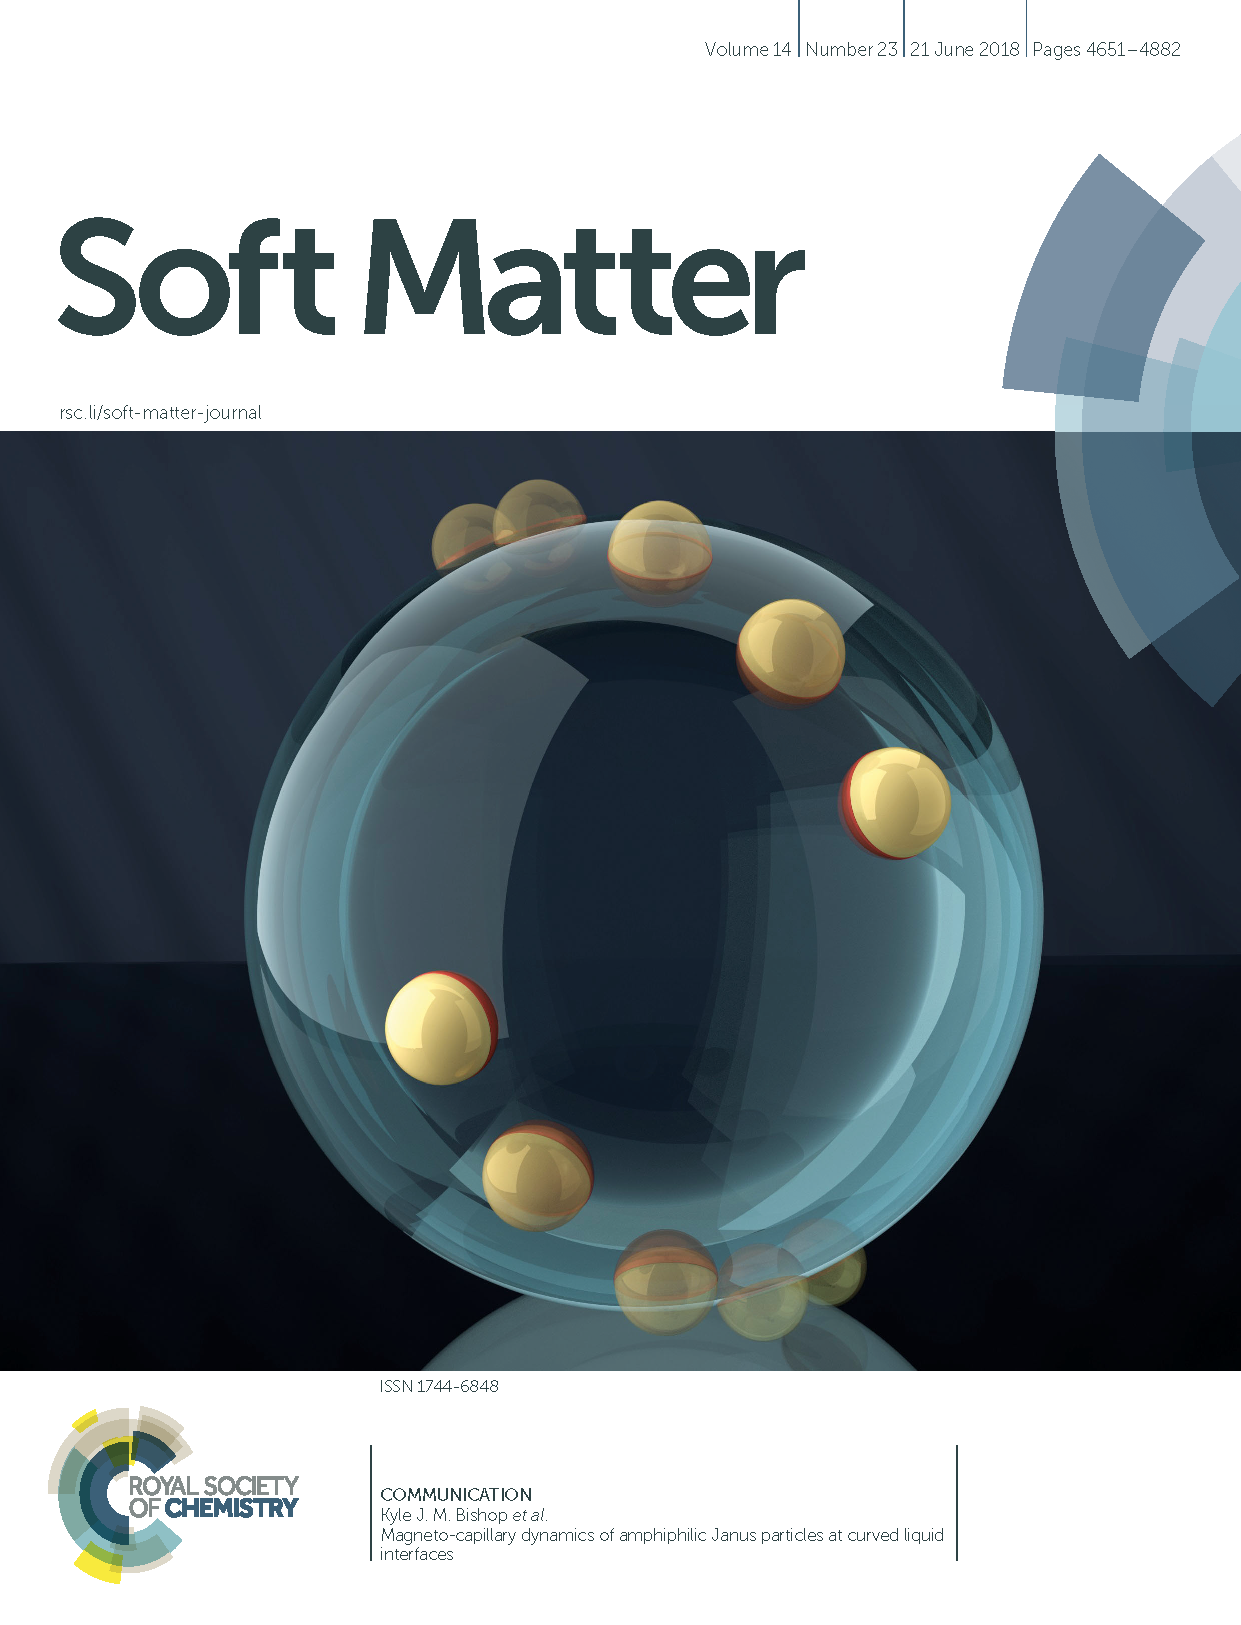 Cover of Soft Matter journal (2018).